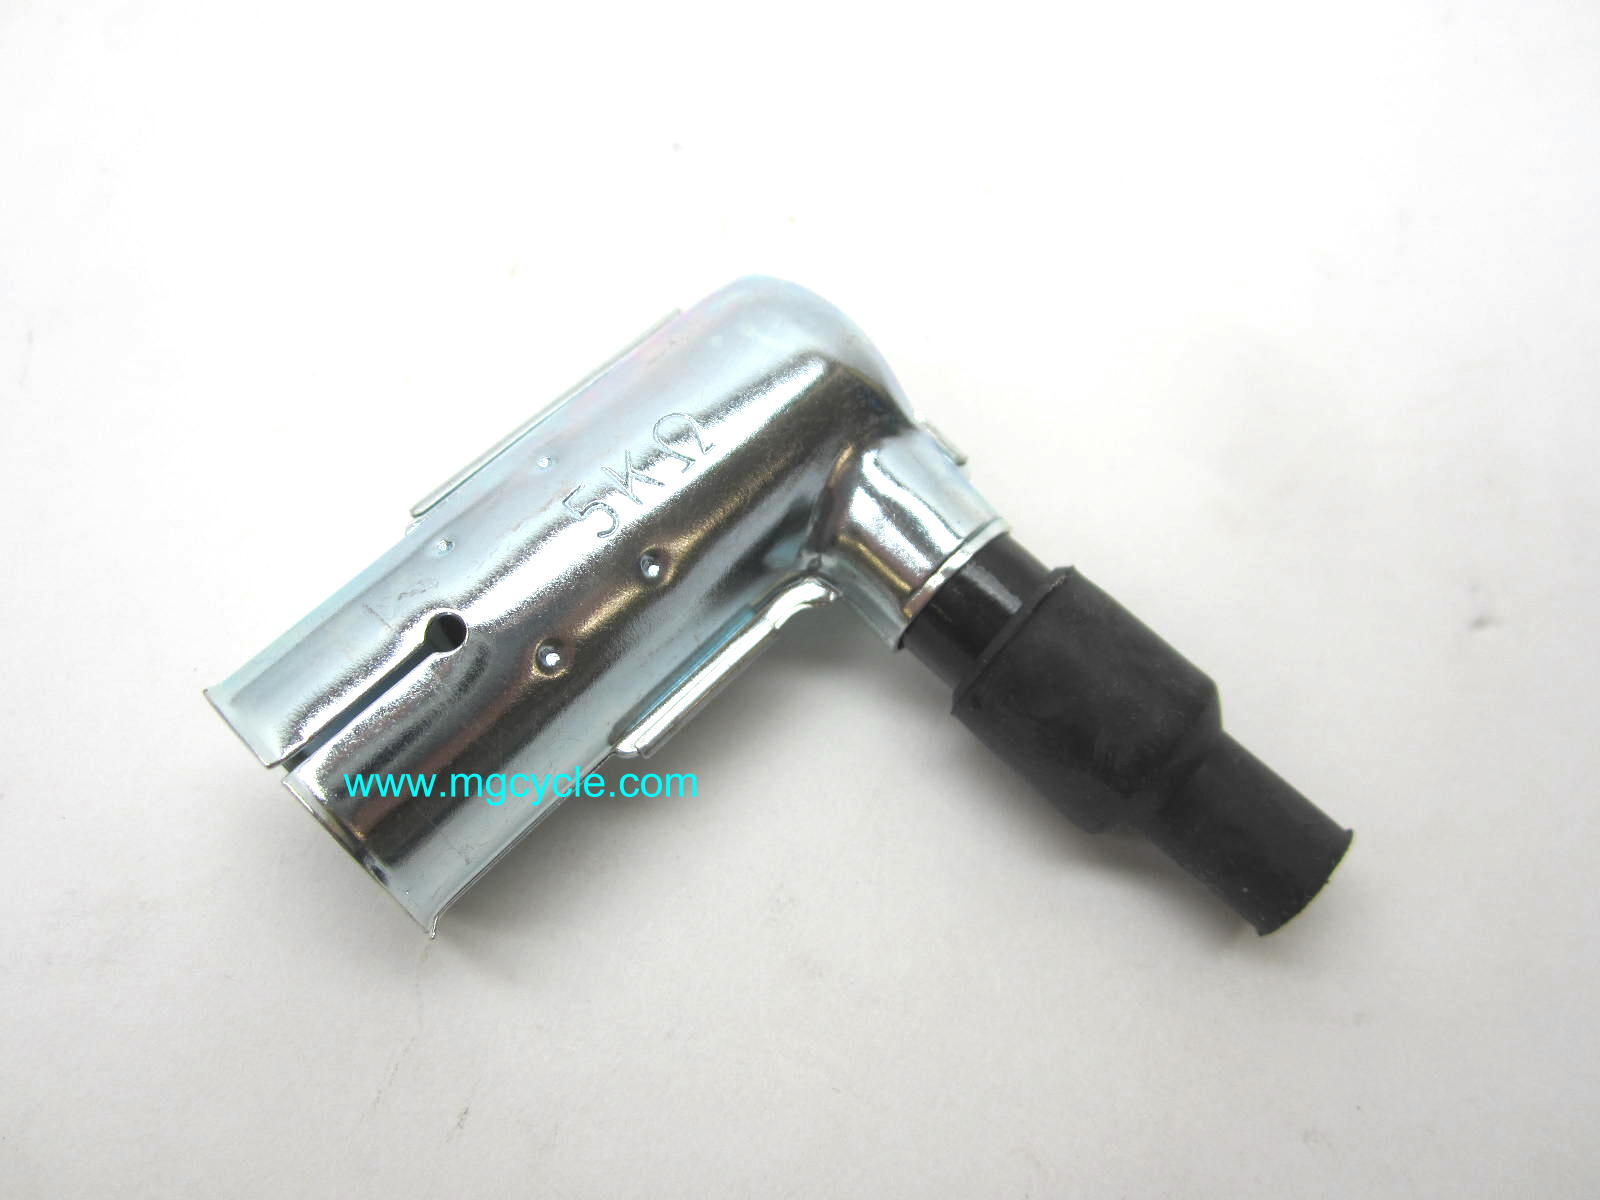 Bosch type metal shielded spark plug cap, 5k ohm